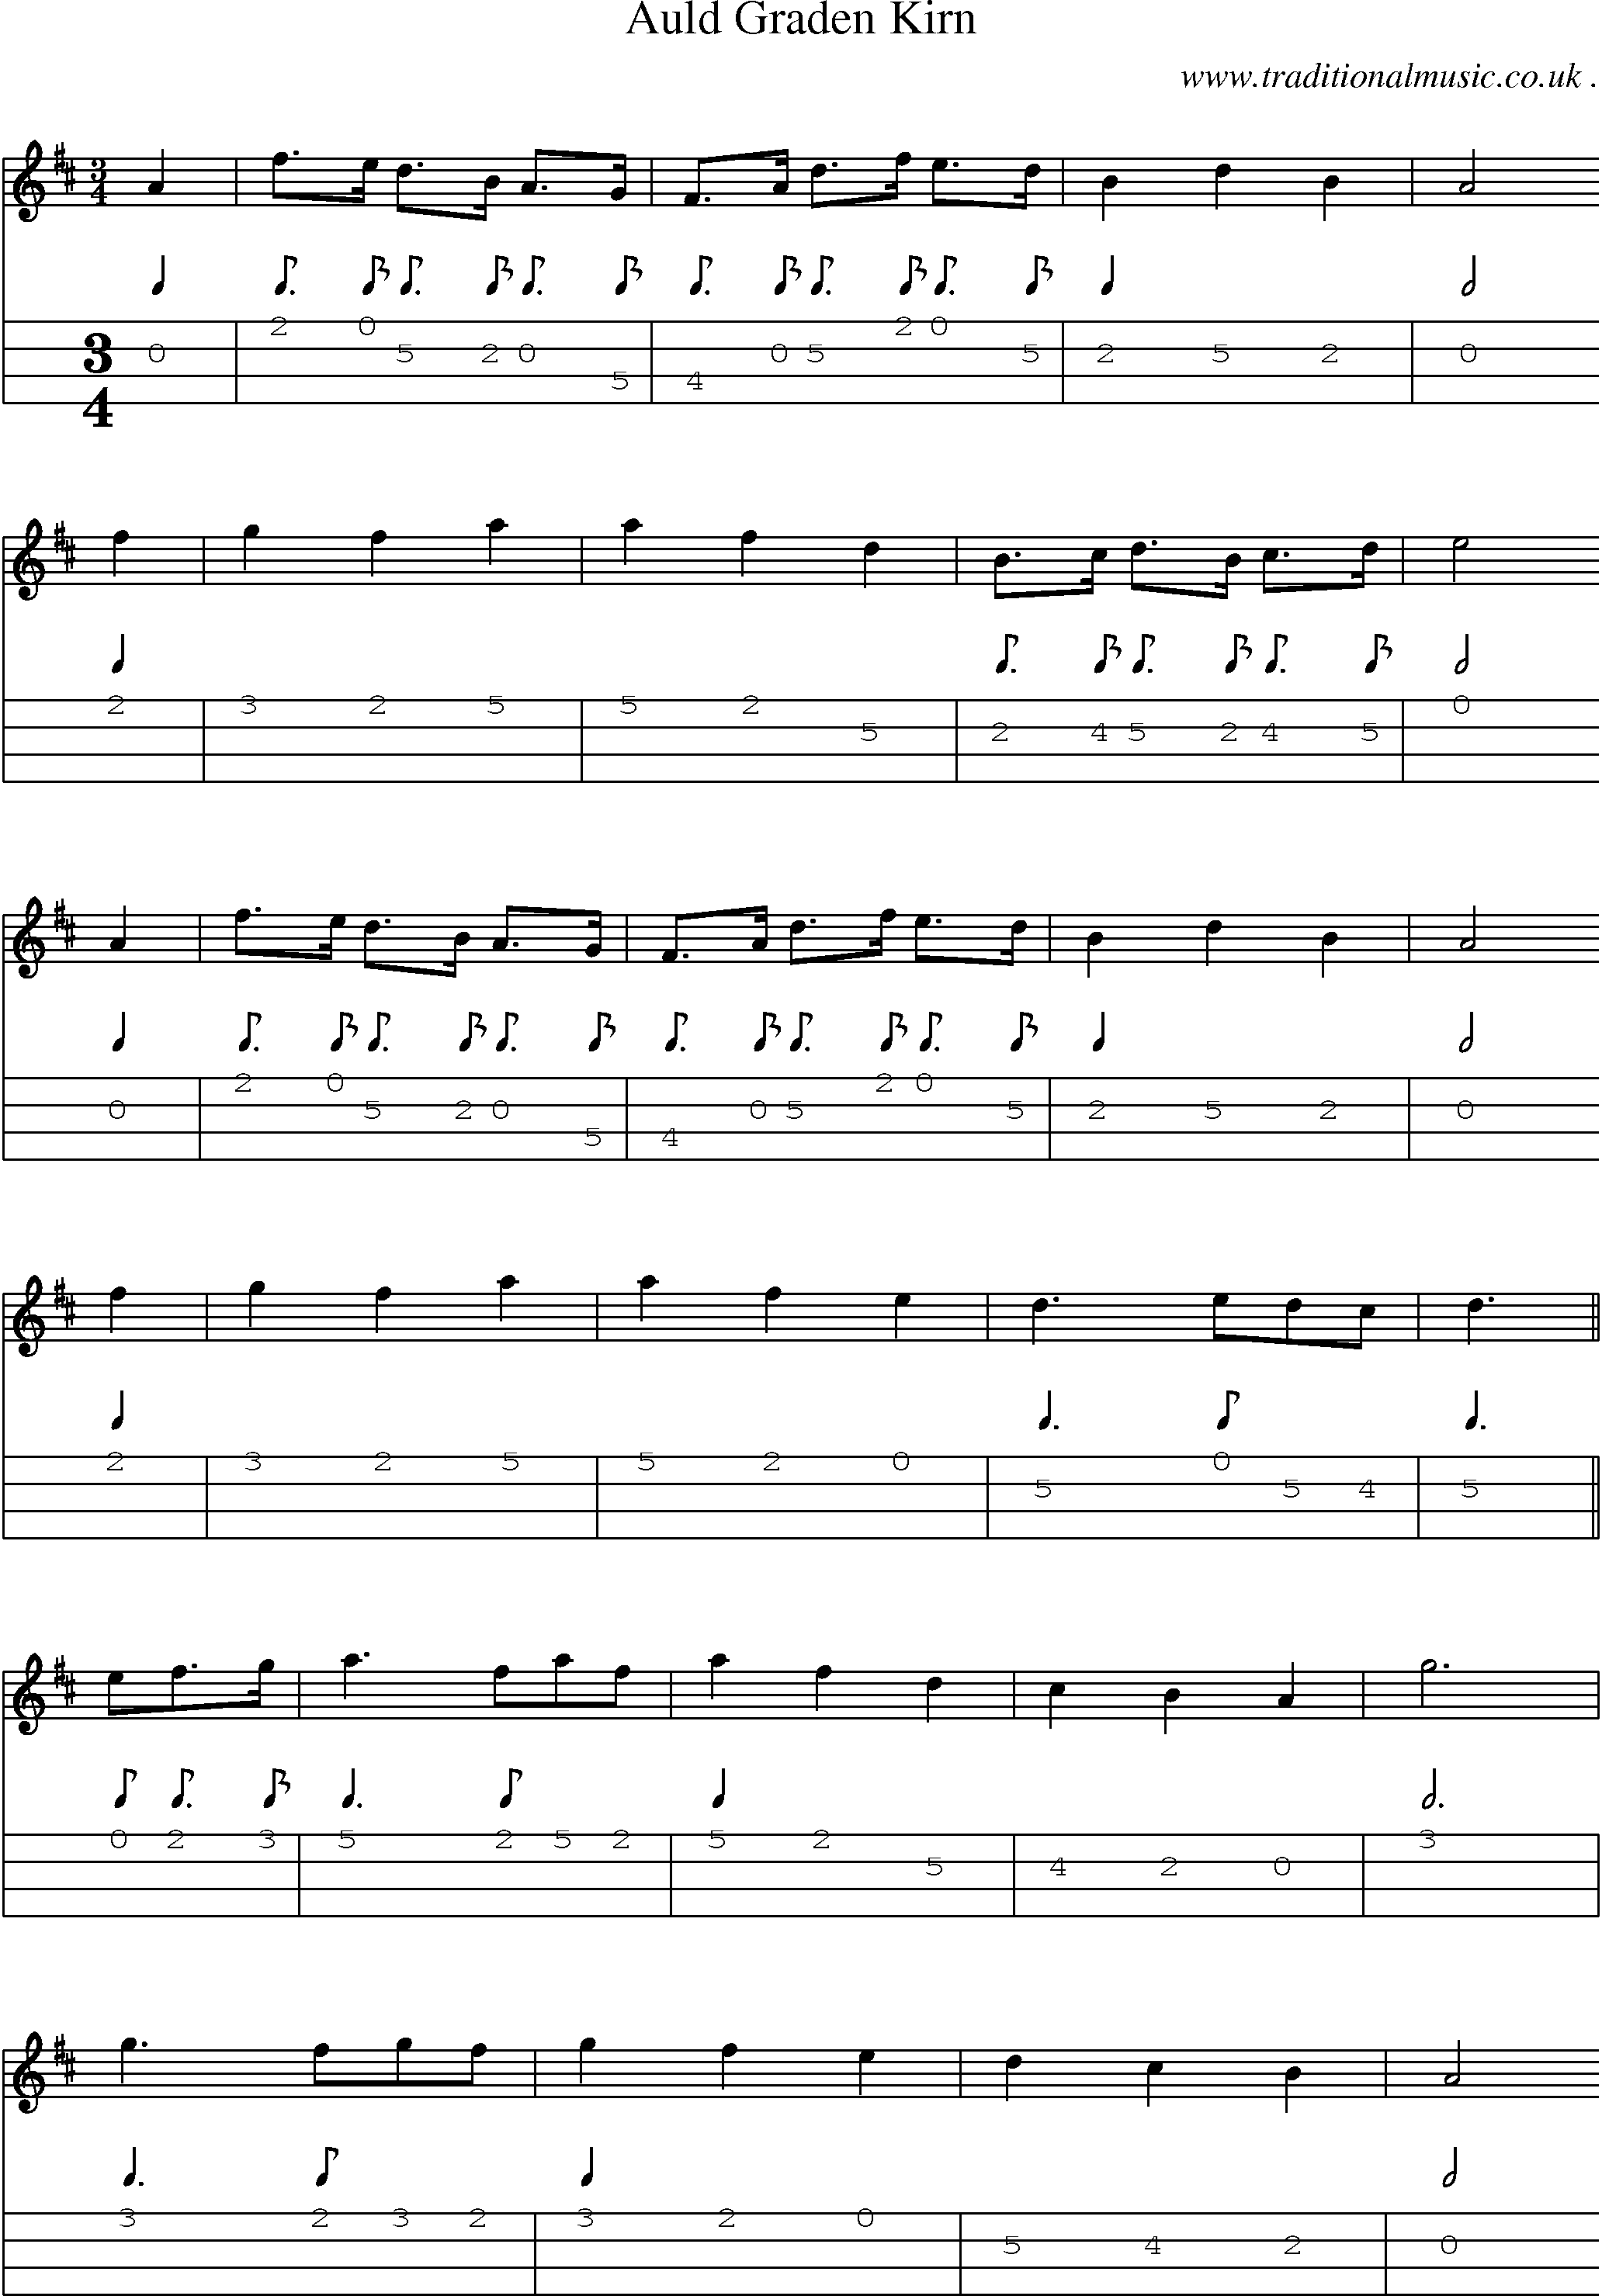 Sheet-music  score, Chords and Mandolin Tabs for Auld Graden Kirn